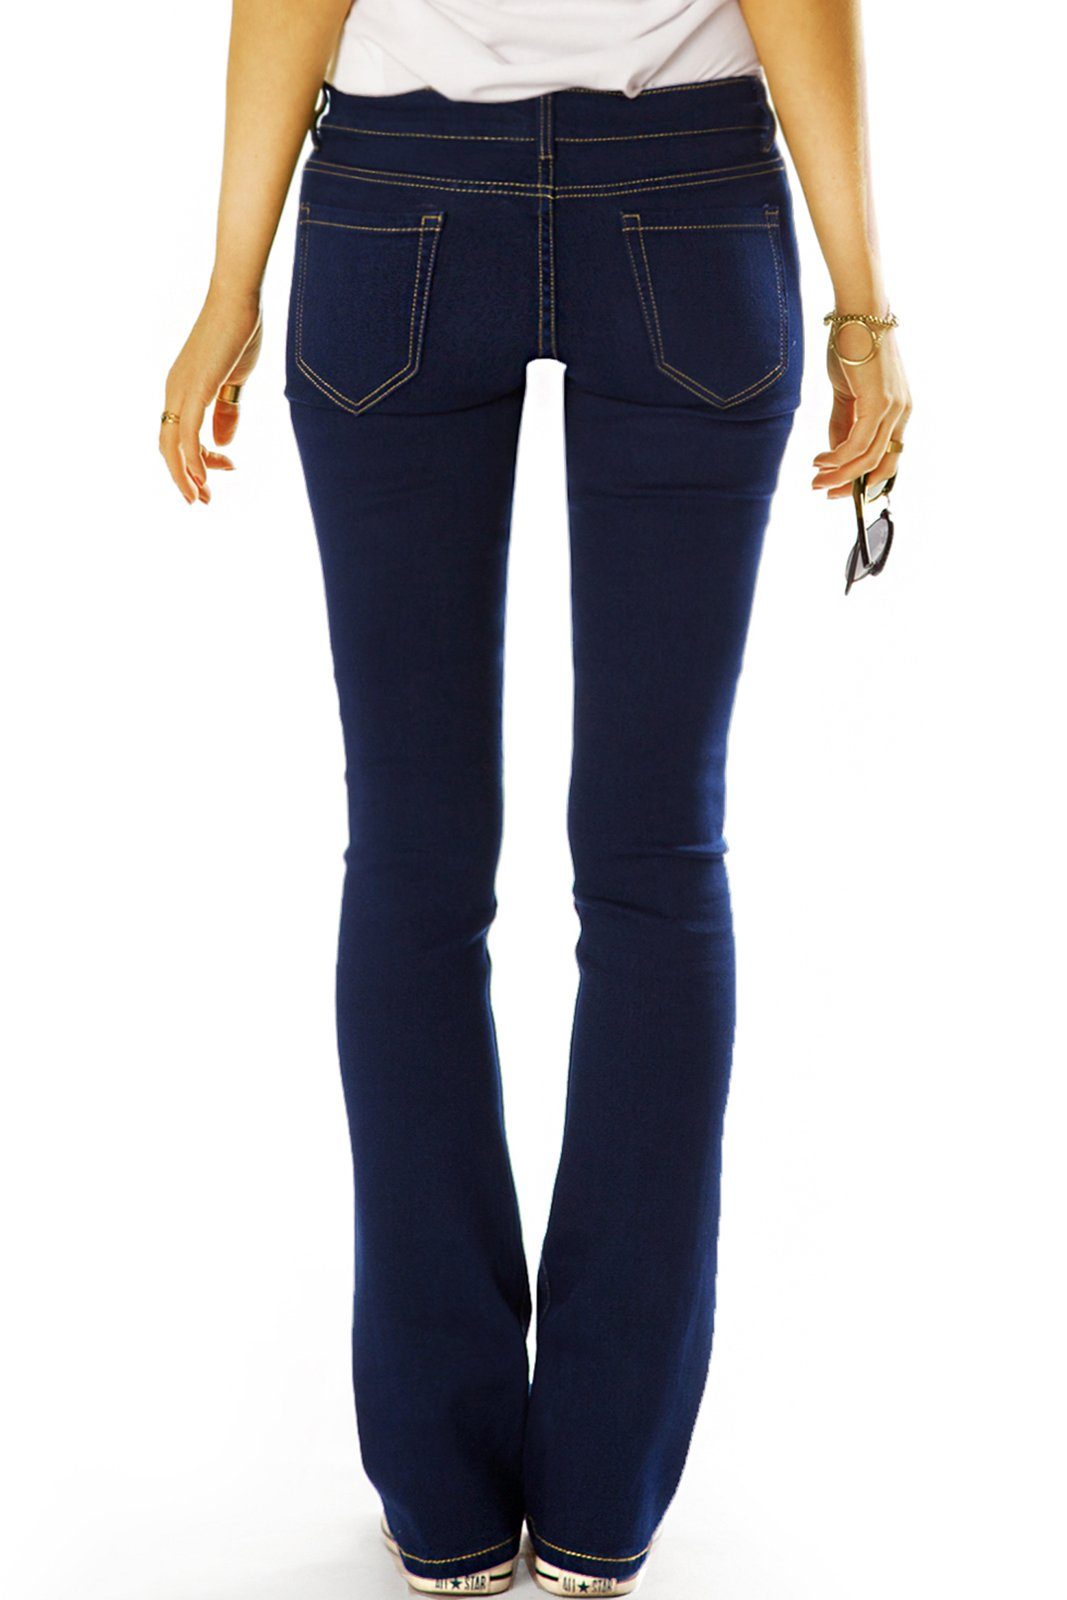 Hüftjeans blau Bootcut 5-Pocket-Style styled - Stretch-Anteil, Bootcut-Jeans Jeanshose be mit Stretchjeans Damen -j18g